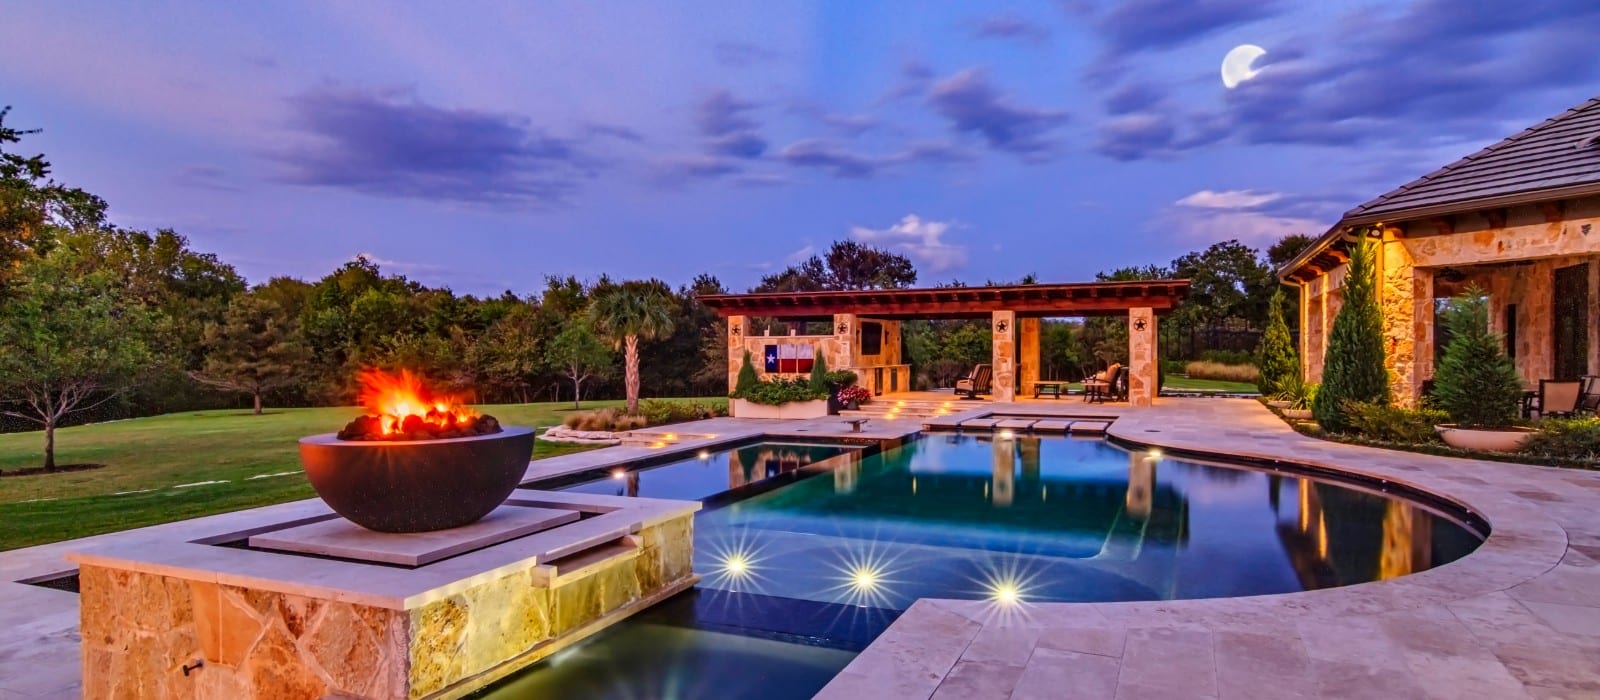 Gorgeous backyard pool with flame brazier